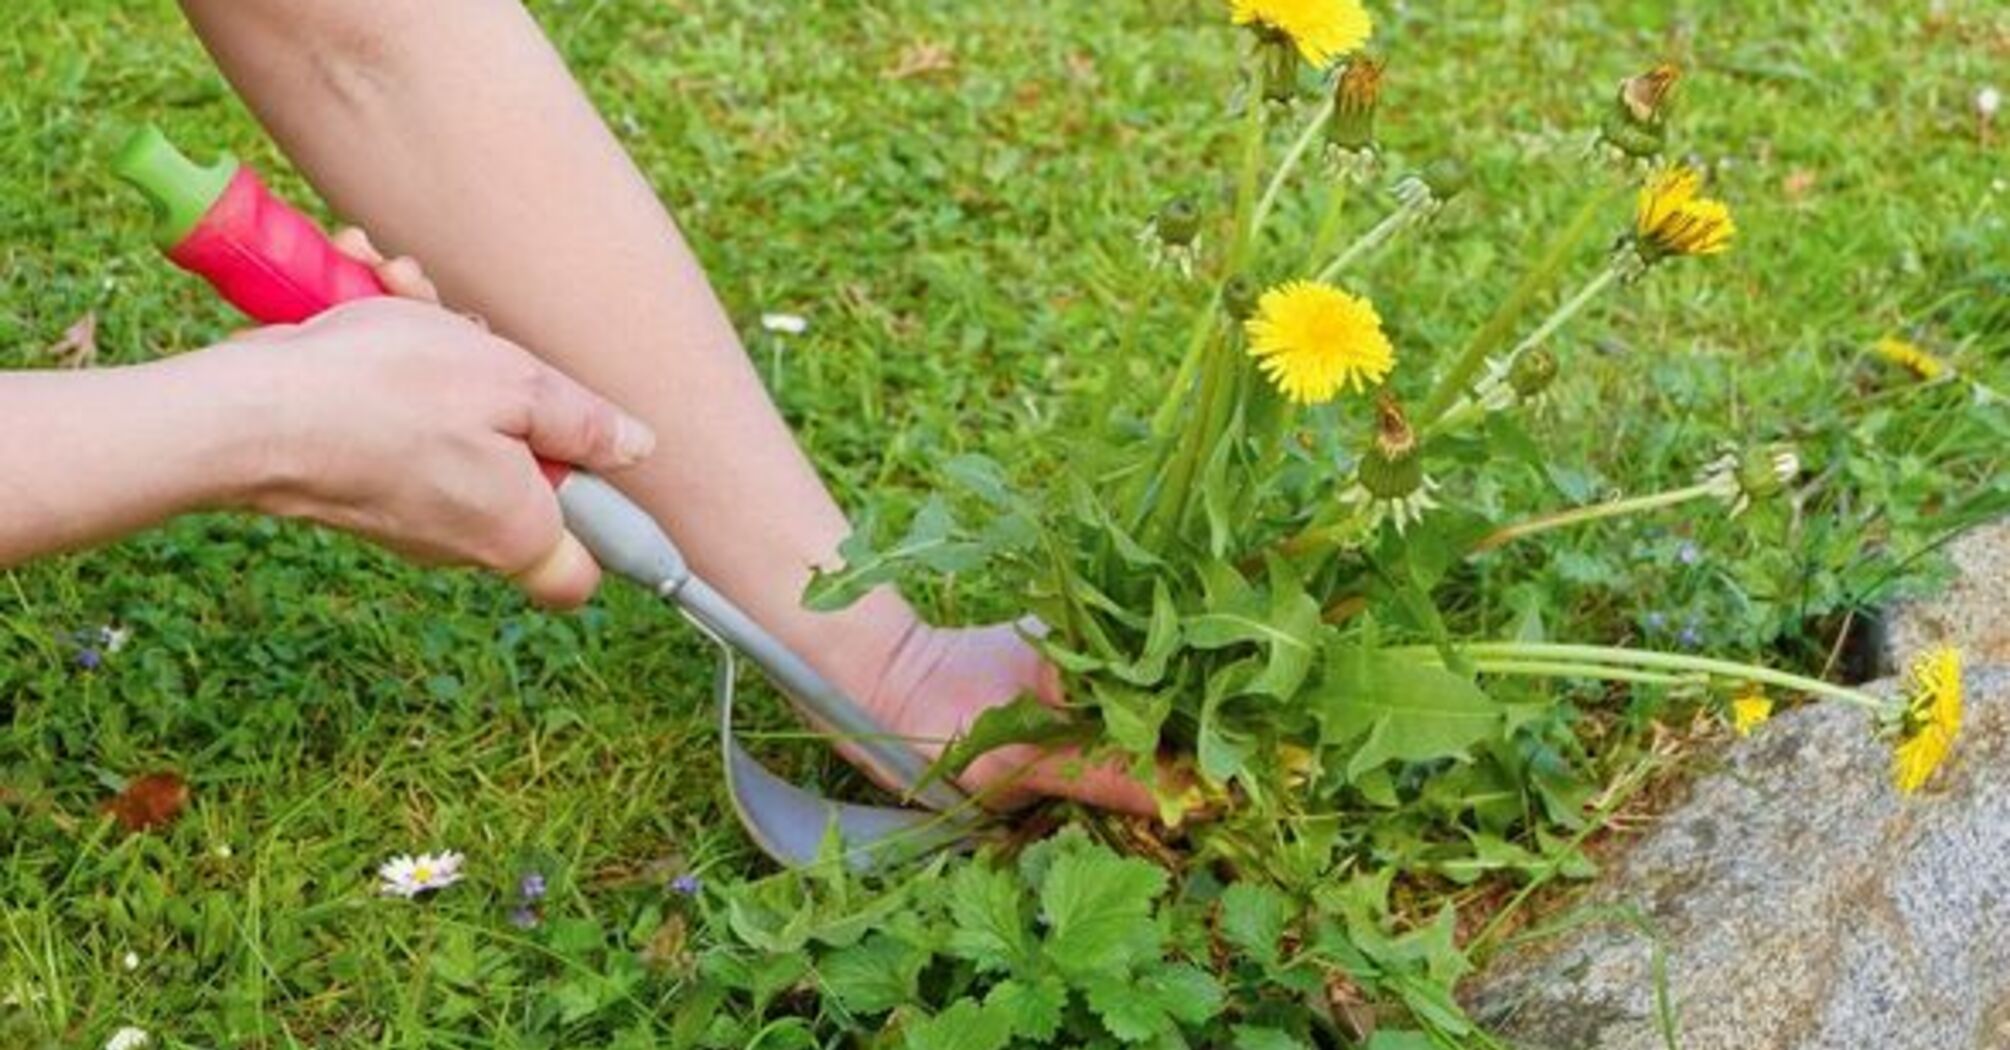 How to get rid of dandelion in a garden